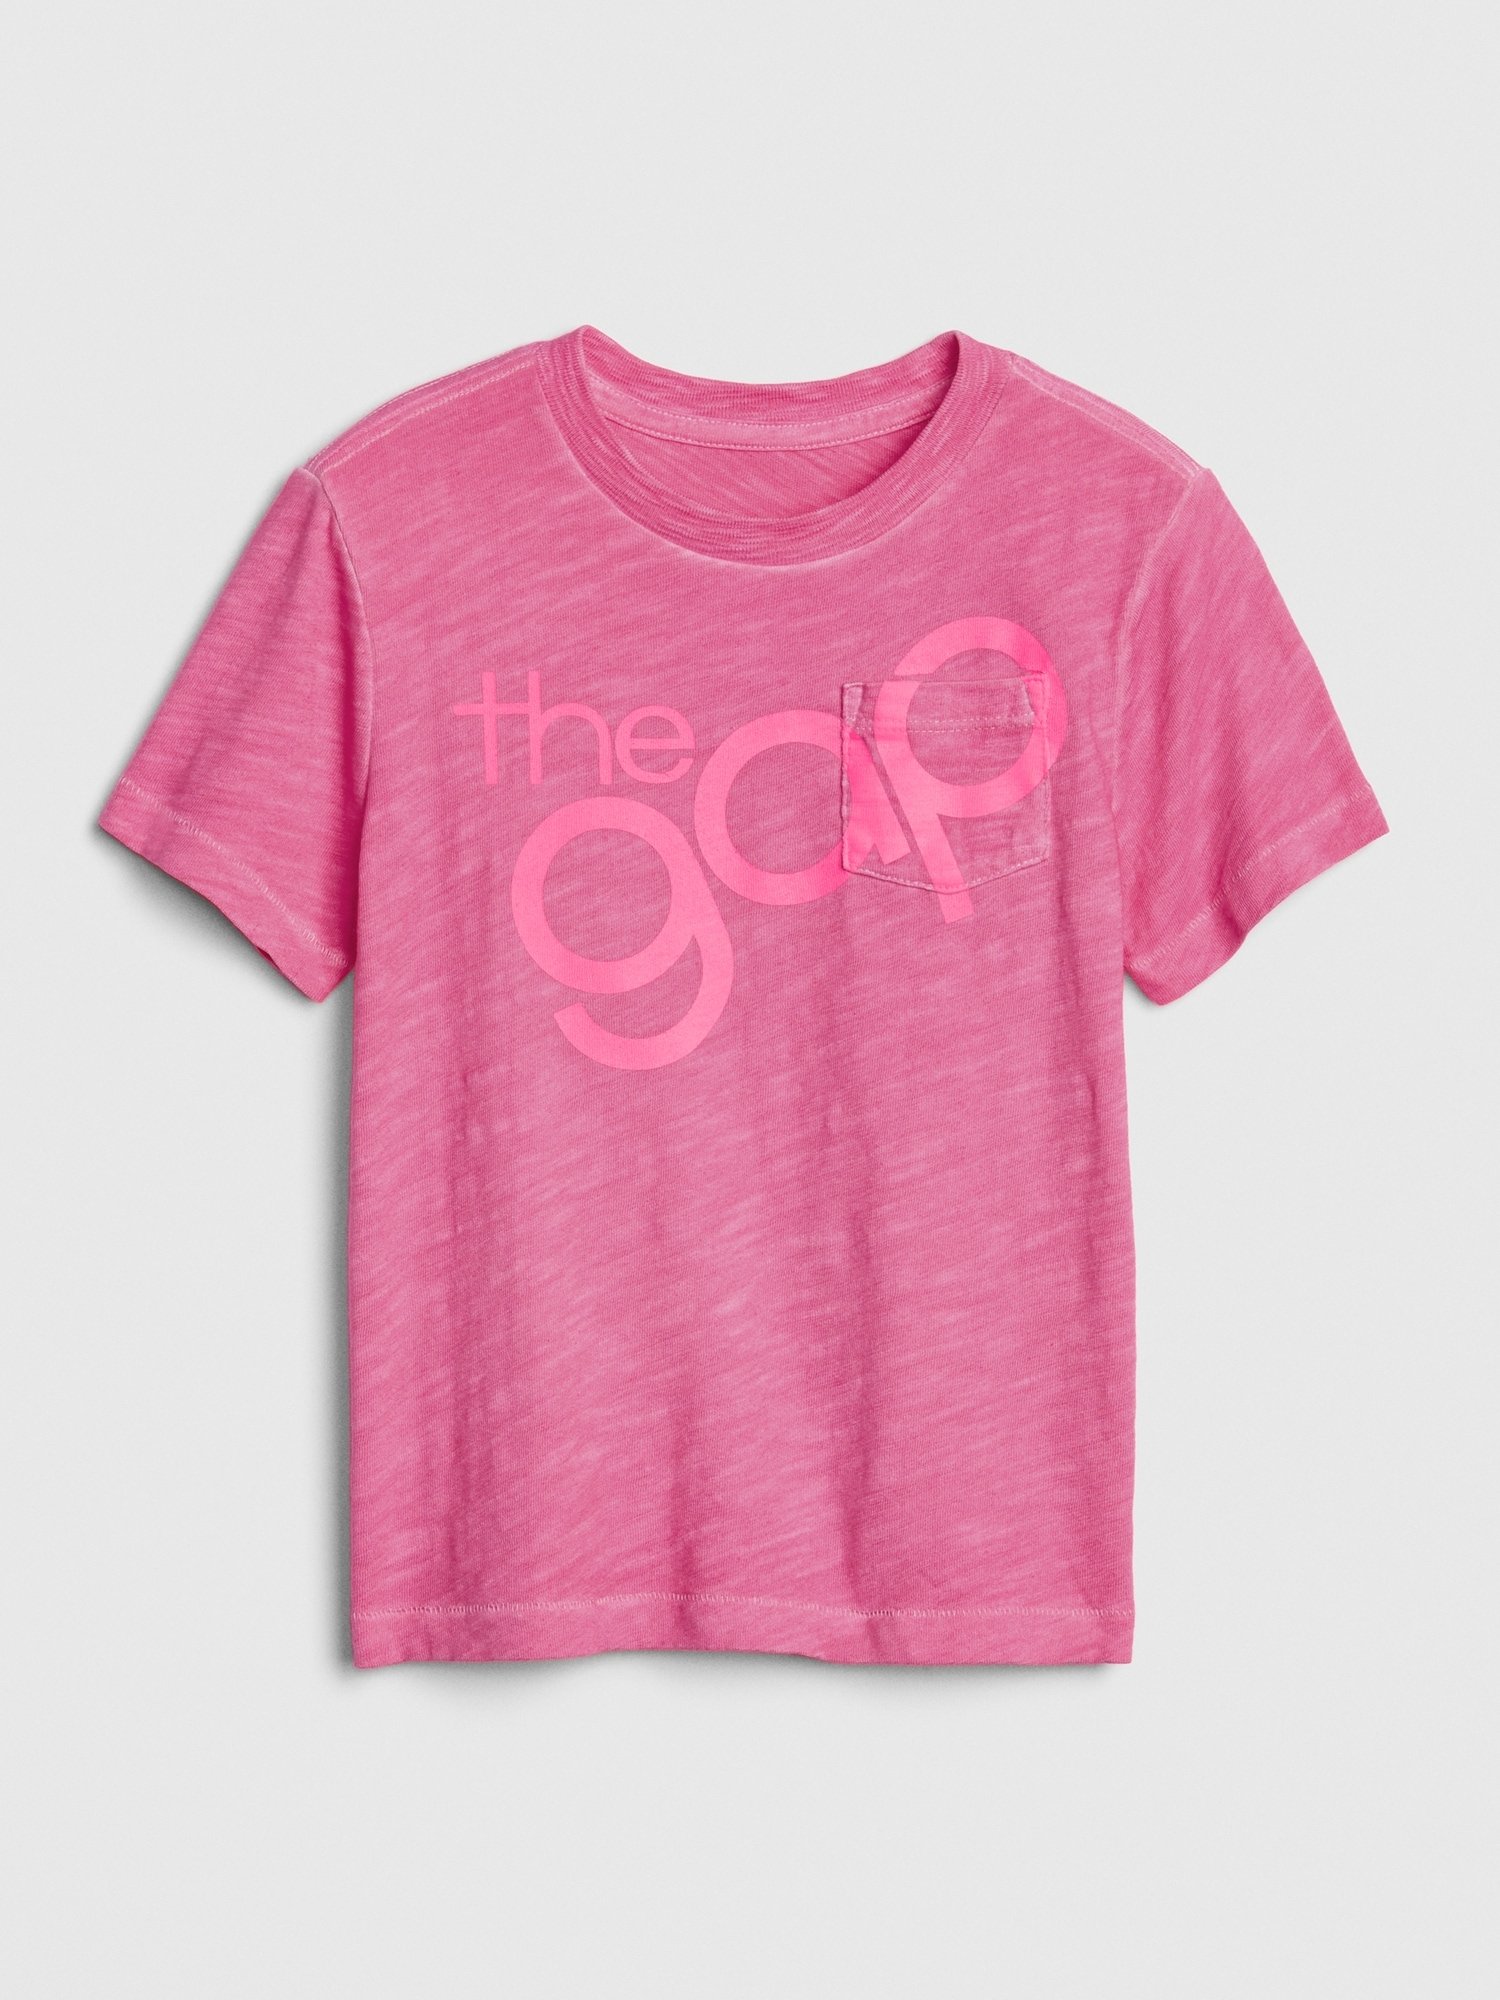 Gap Logo 50.Yıl T-shirt product image